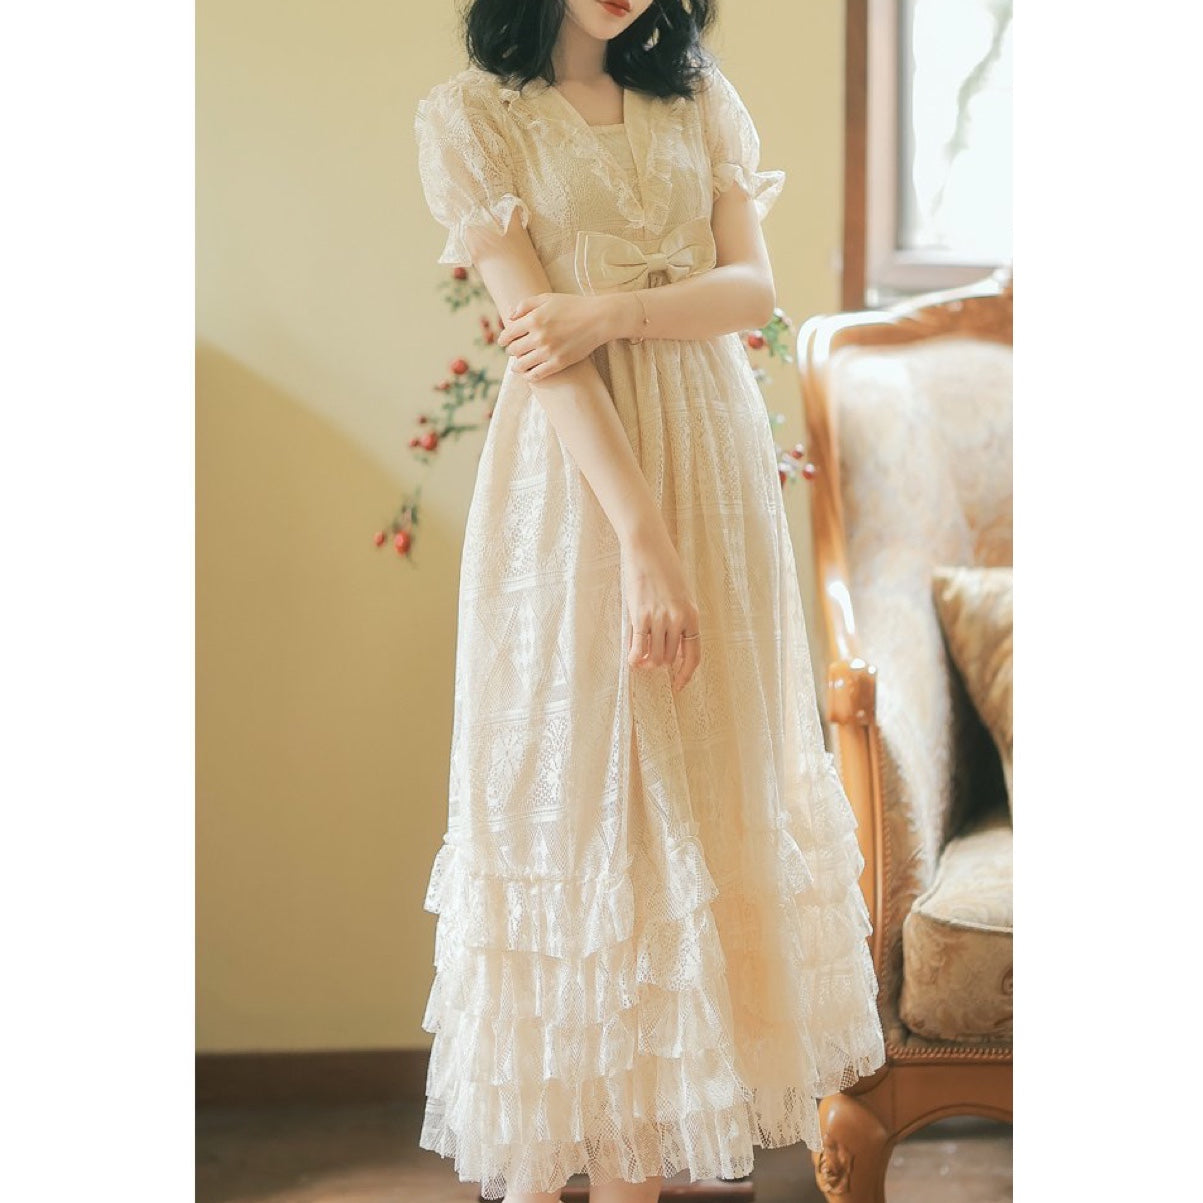 Dolly Heart Vintage-style Royalcore Lace Princess Dress 